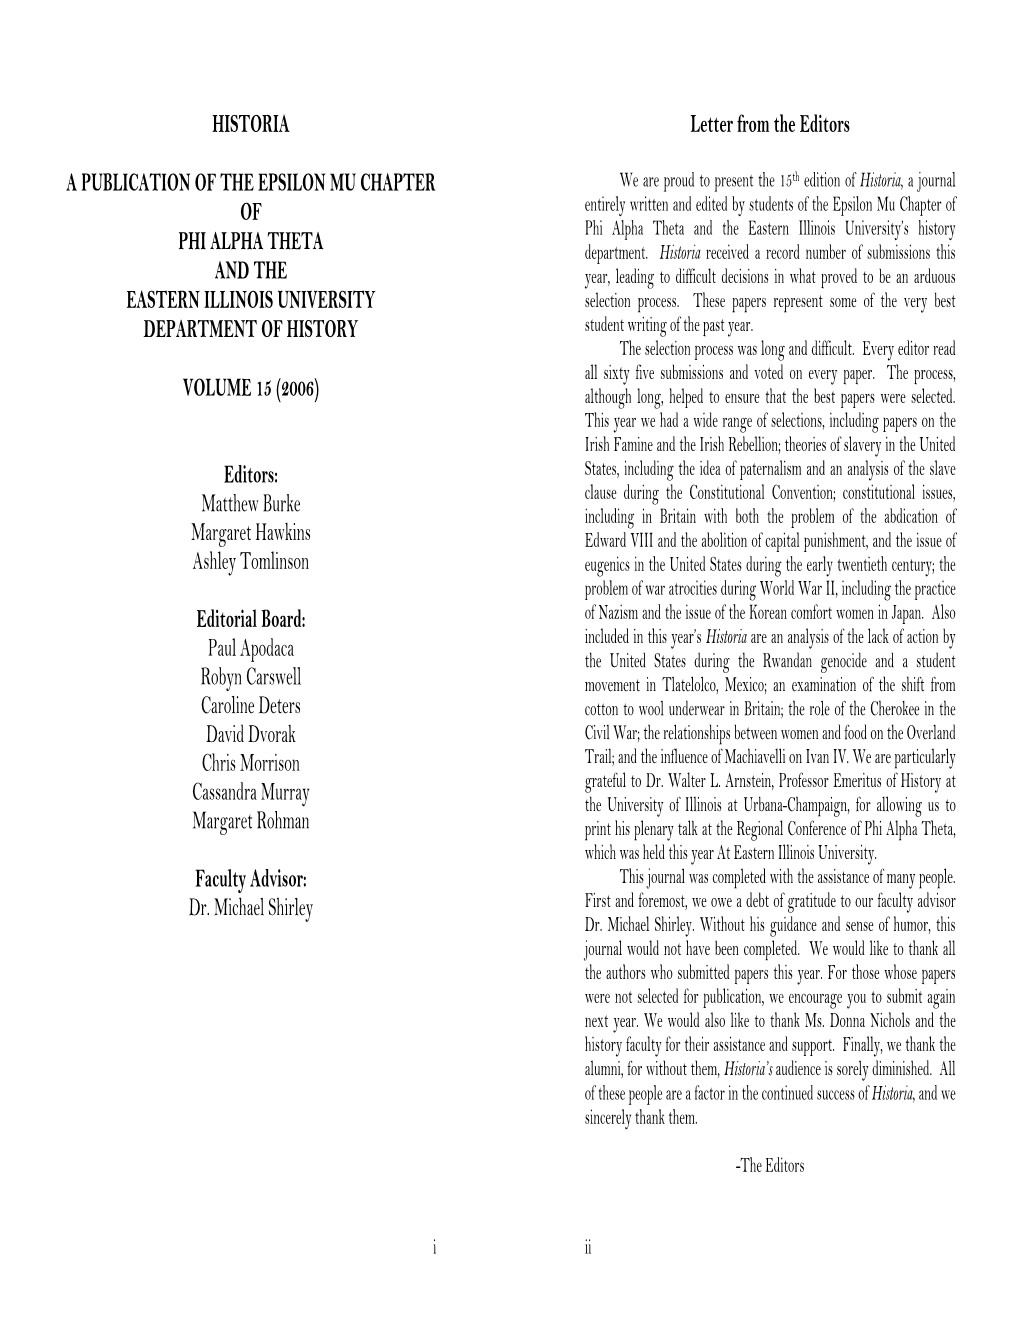 Historia a Publication of the Epsilon Mu Chapter Of